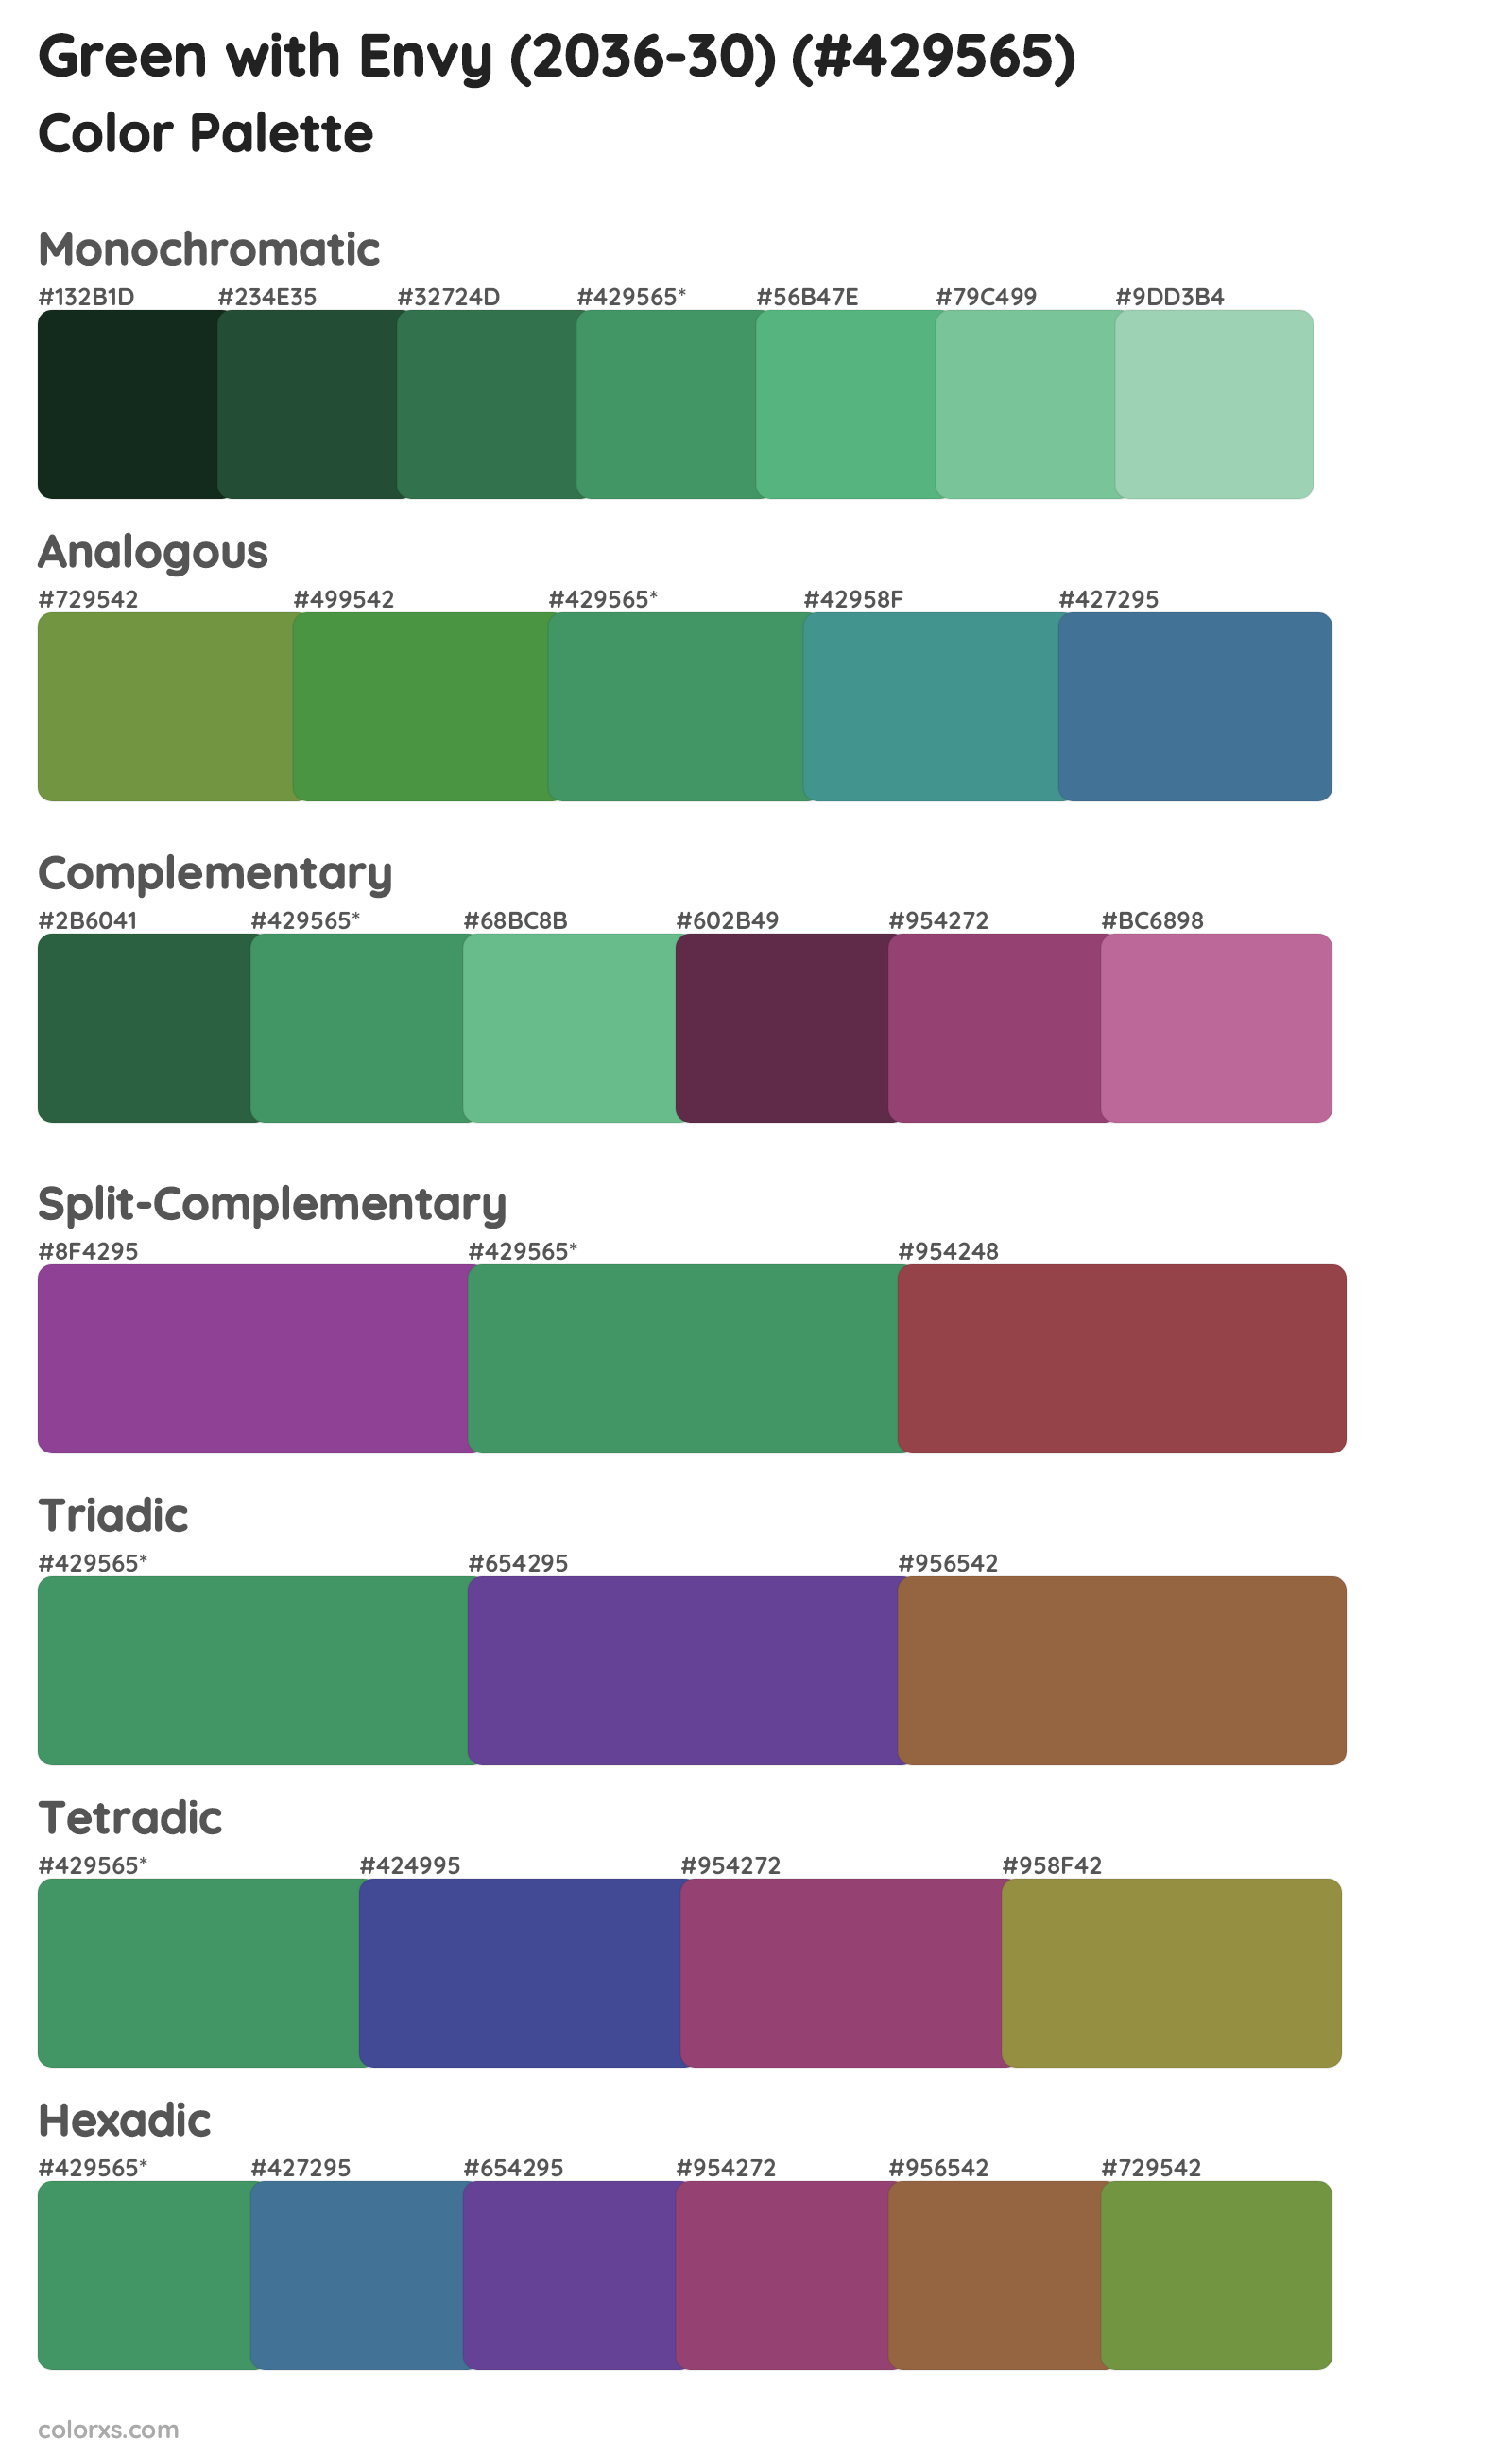 Green with Envy (2036-30) Color Scheme Palettes